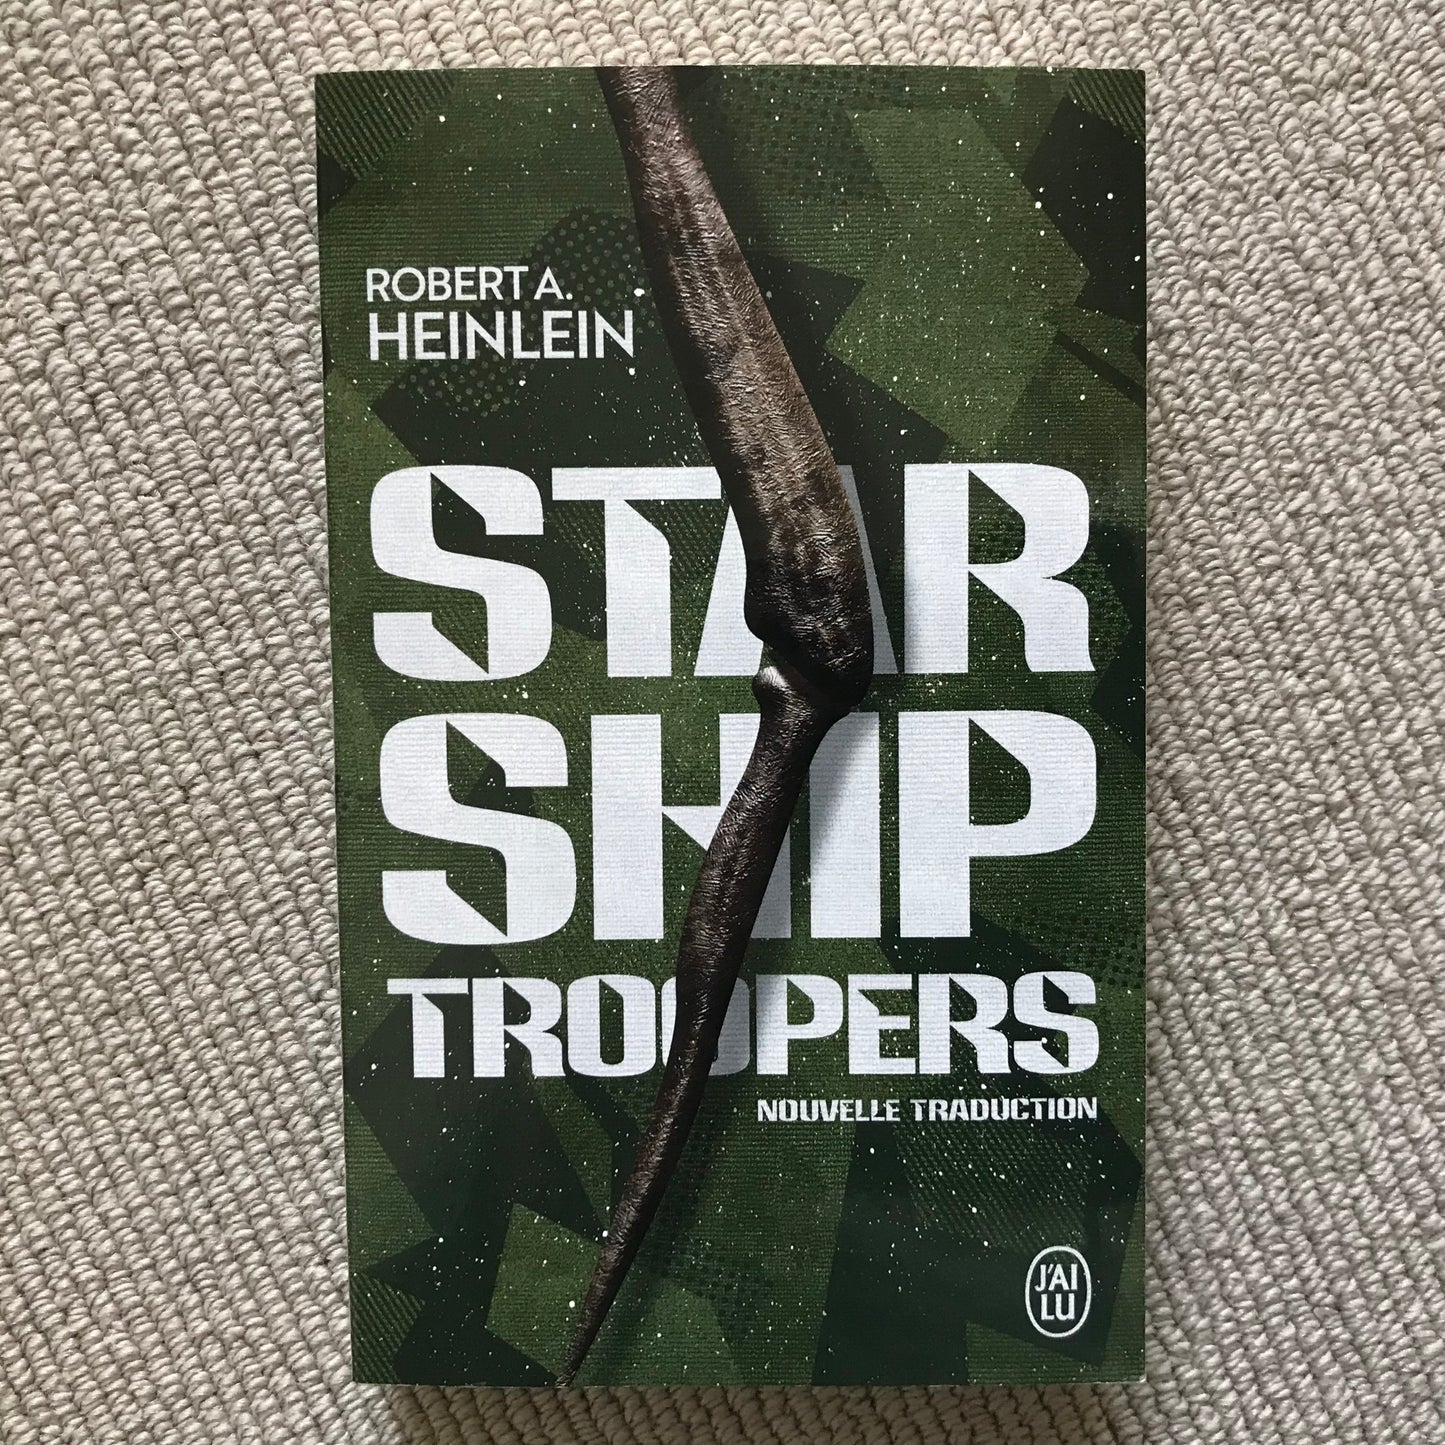 Heinlein, Robert A. - Starship troopers